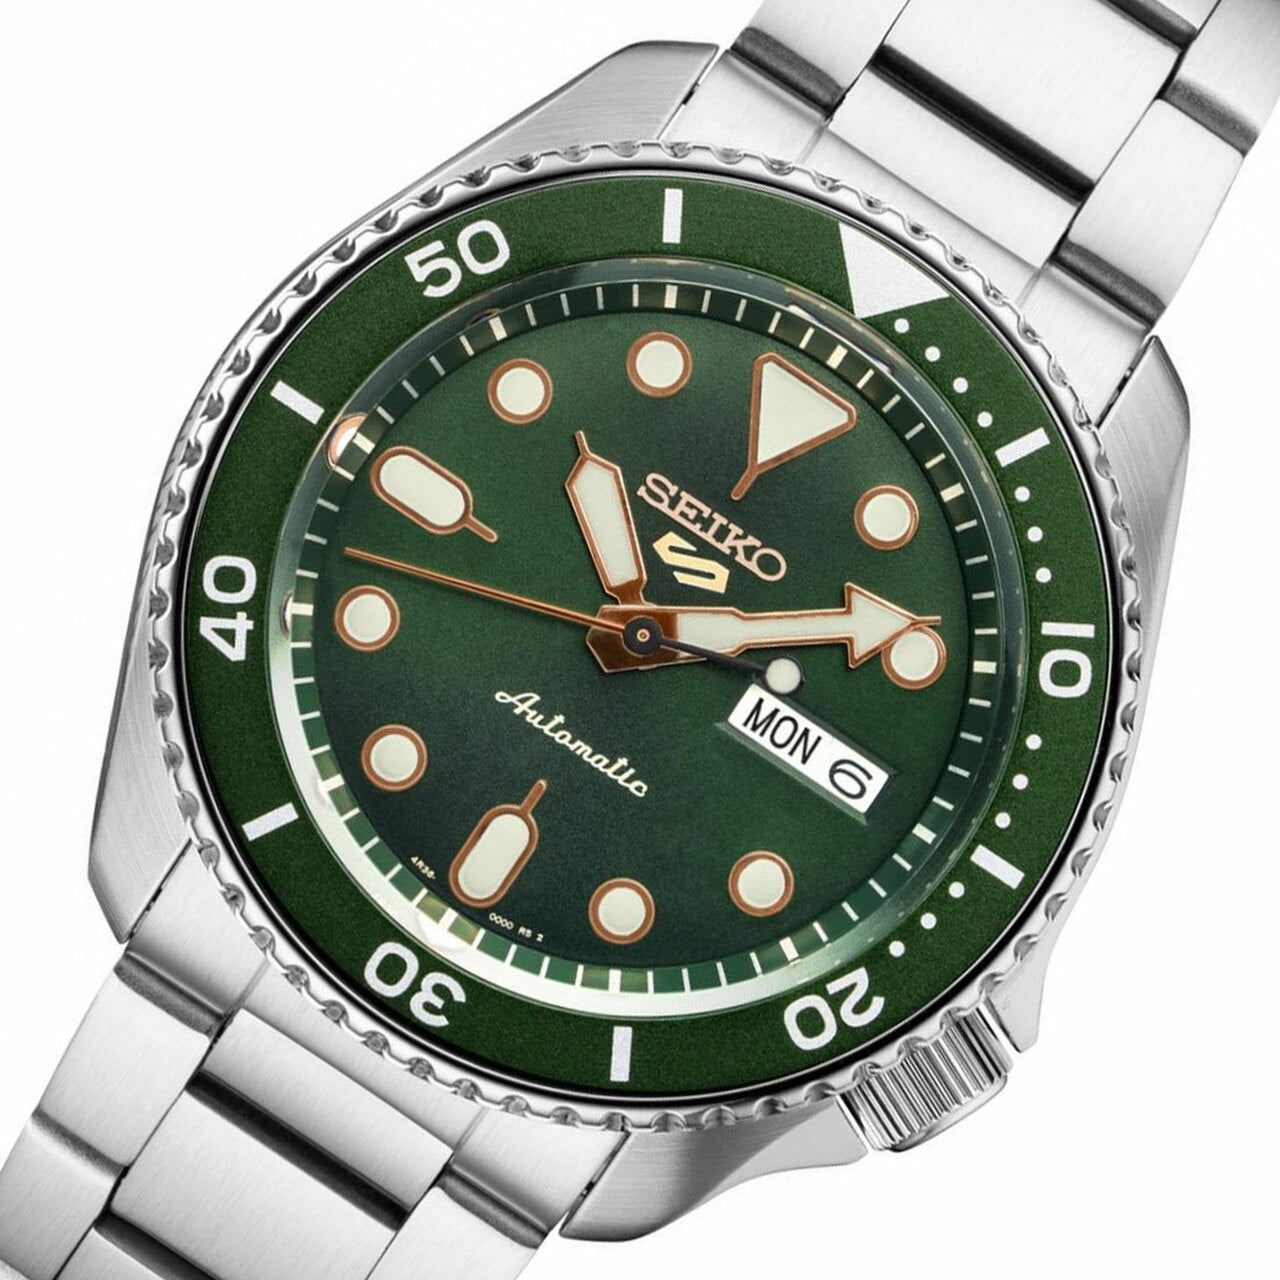 Seiko 5 Sports Green Dial Automatic Watch - SRPD63K1 - Stonex Jewellers